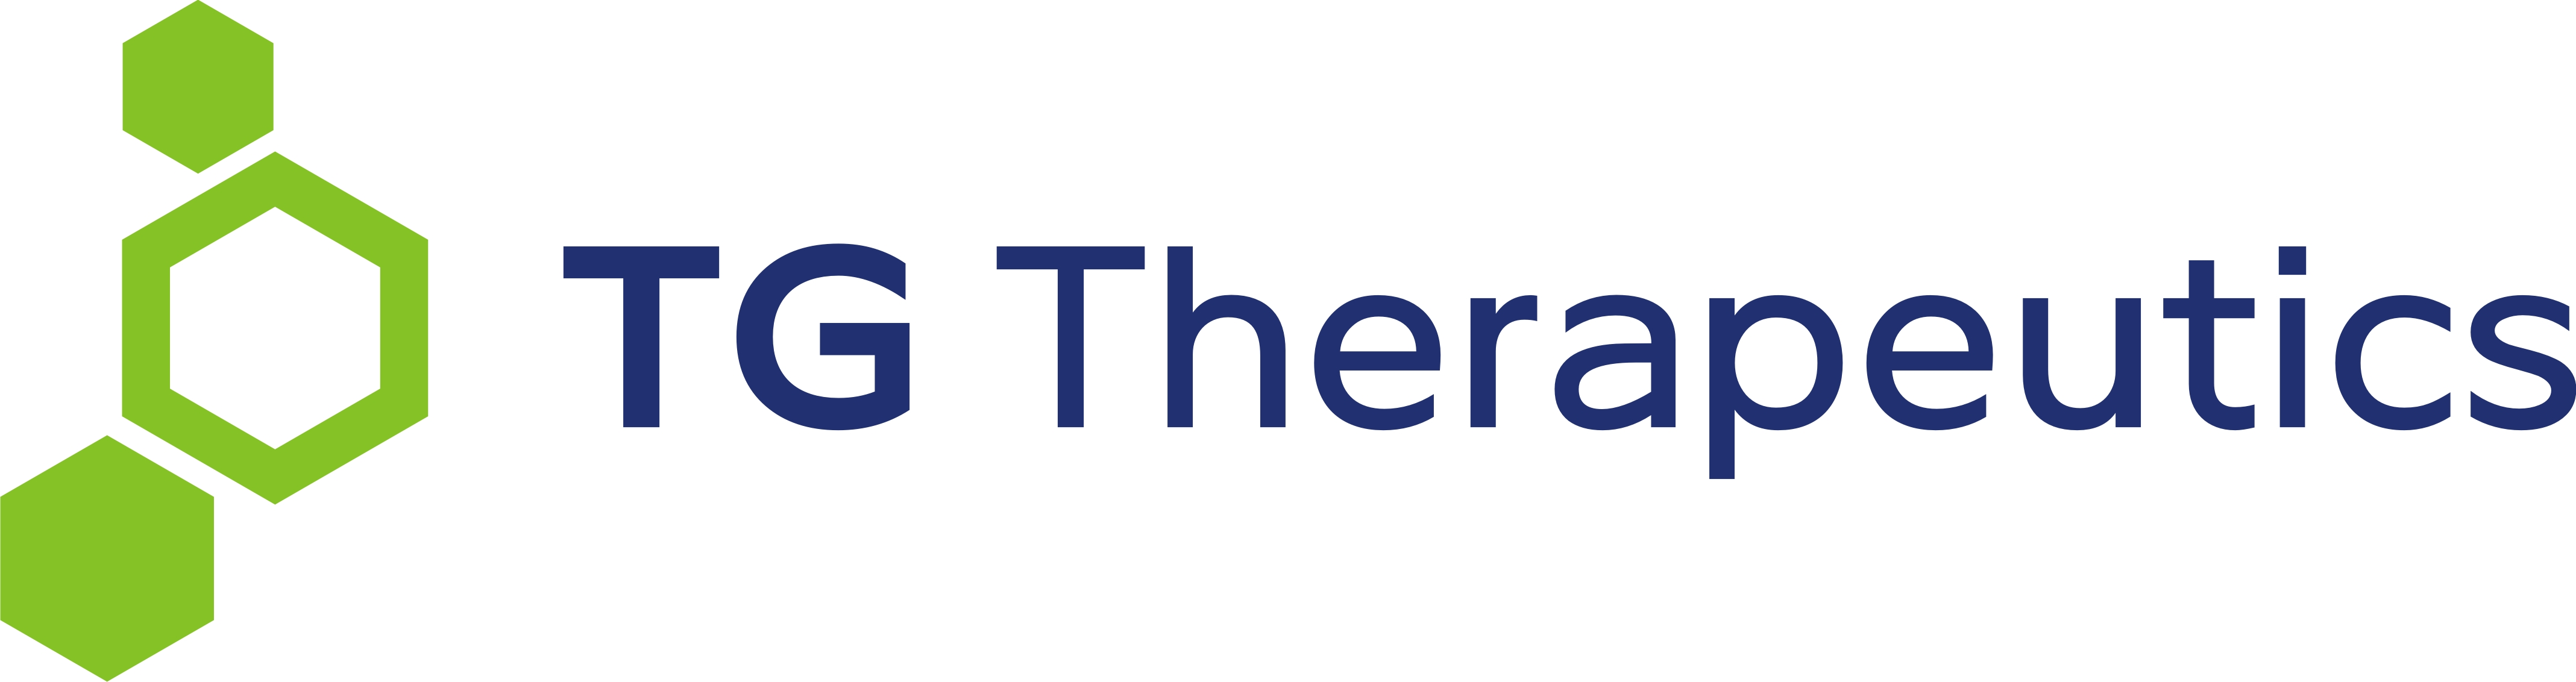 TG Therapeutics Announces Schedule of Data Presentations for BRIUMVI